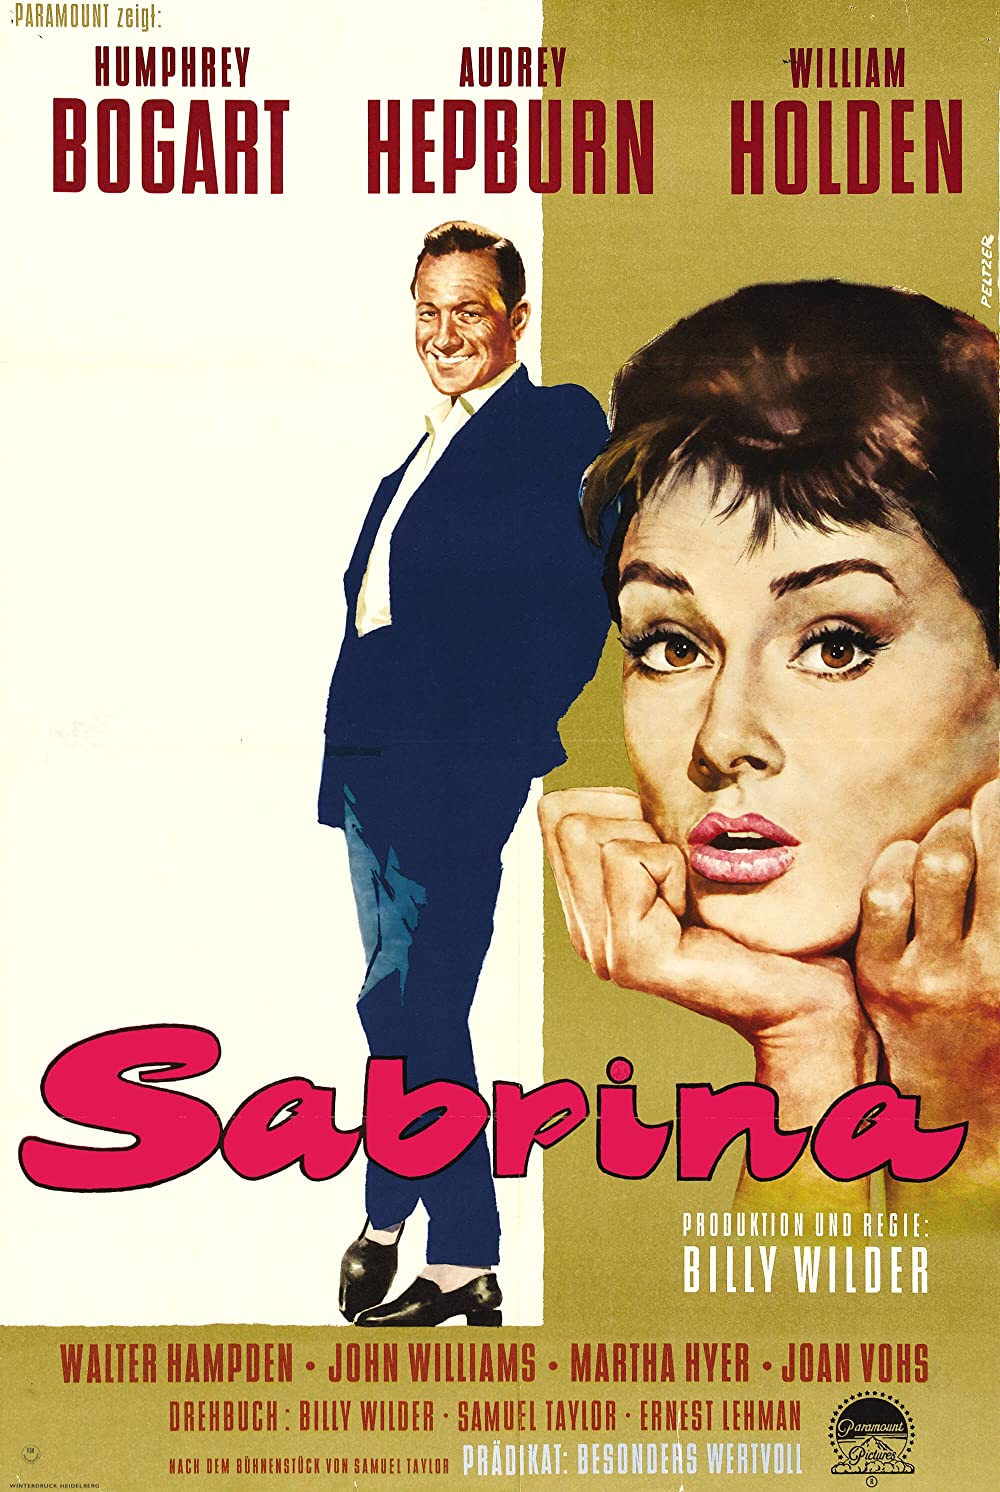 Filmbeschreibung zu Sabrina (1954)